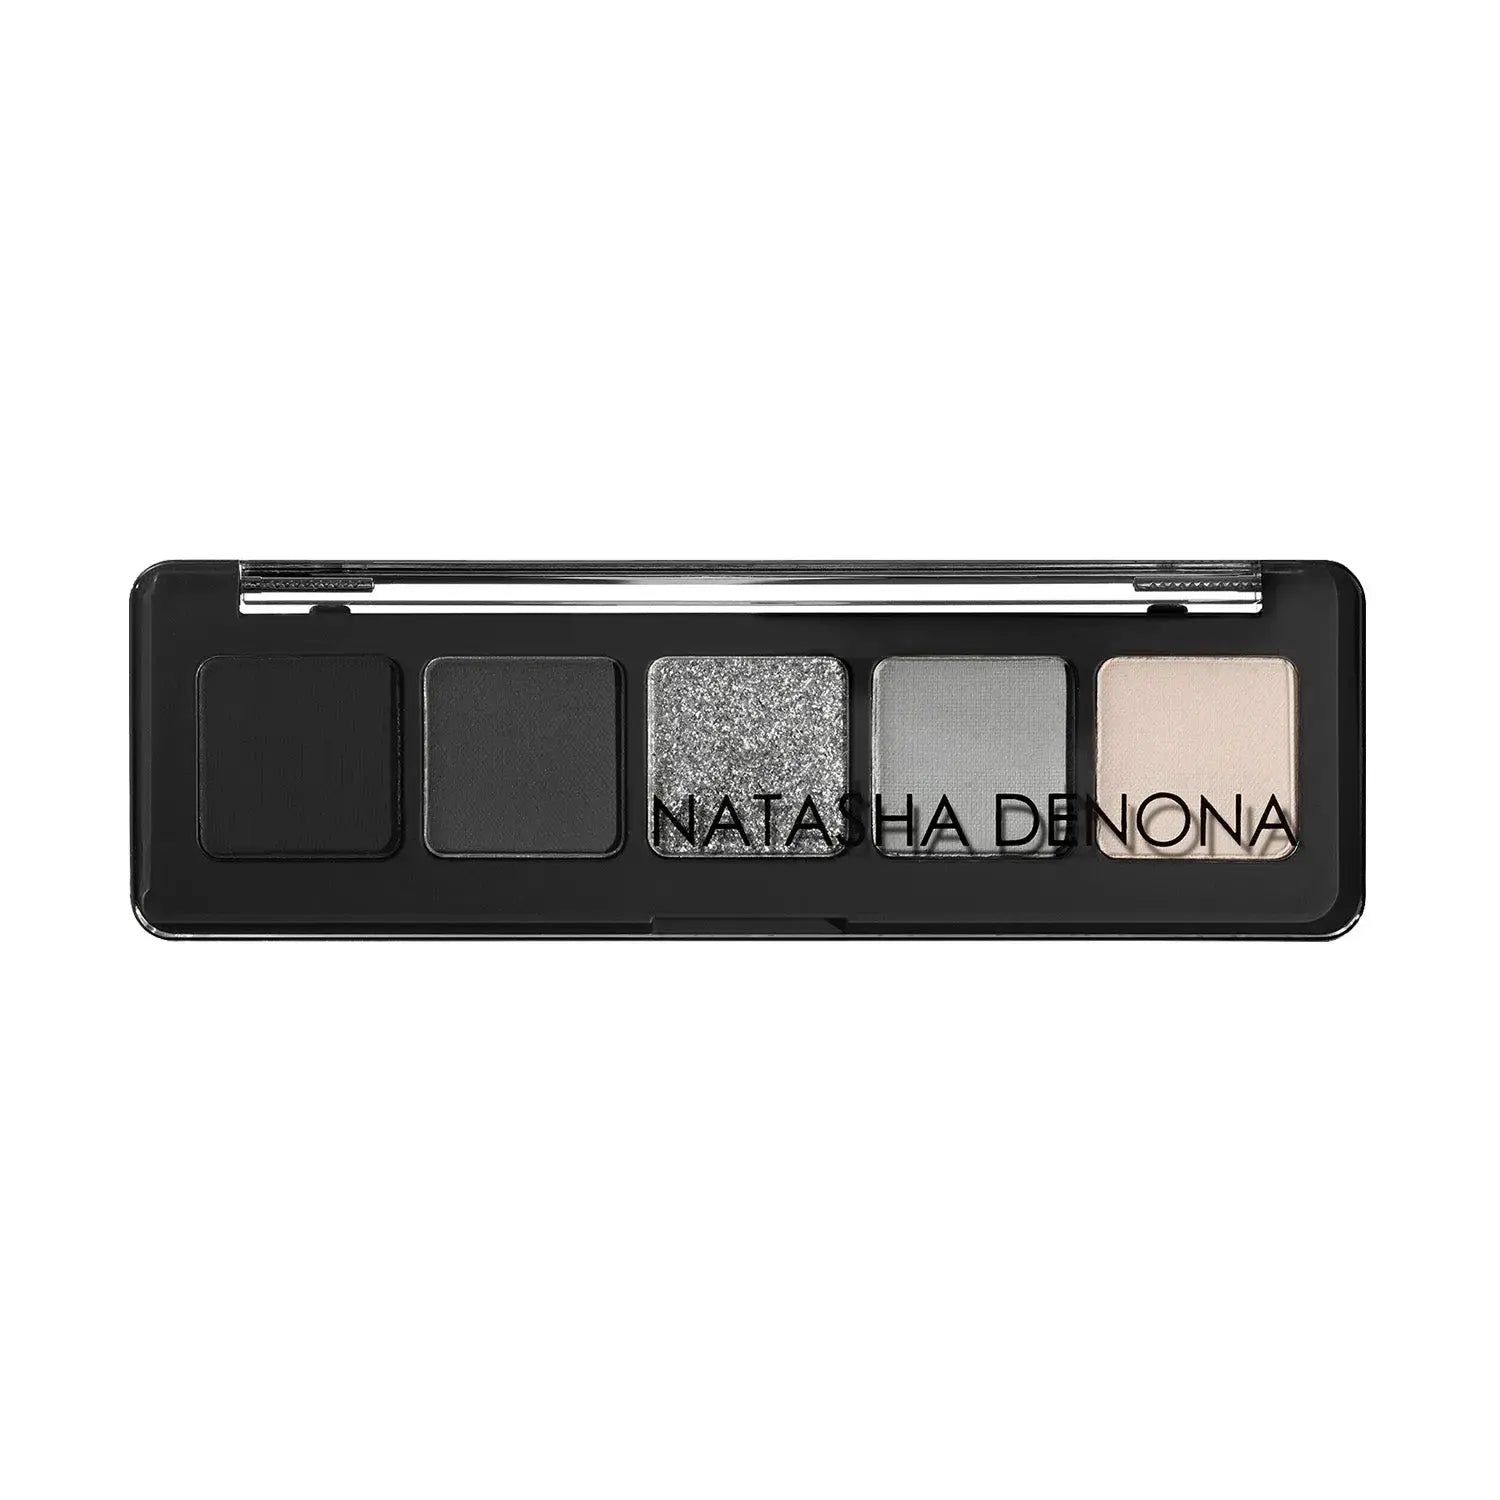 mini eyeshadow palette xenon - פלטת צלליות לעיניים מיני קסנון Natasha Denona